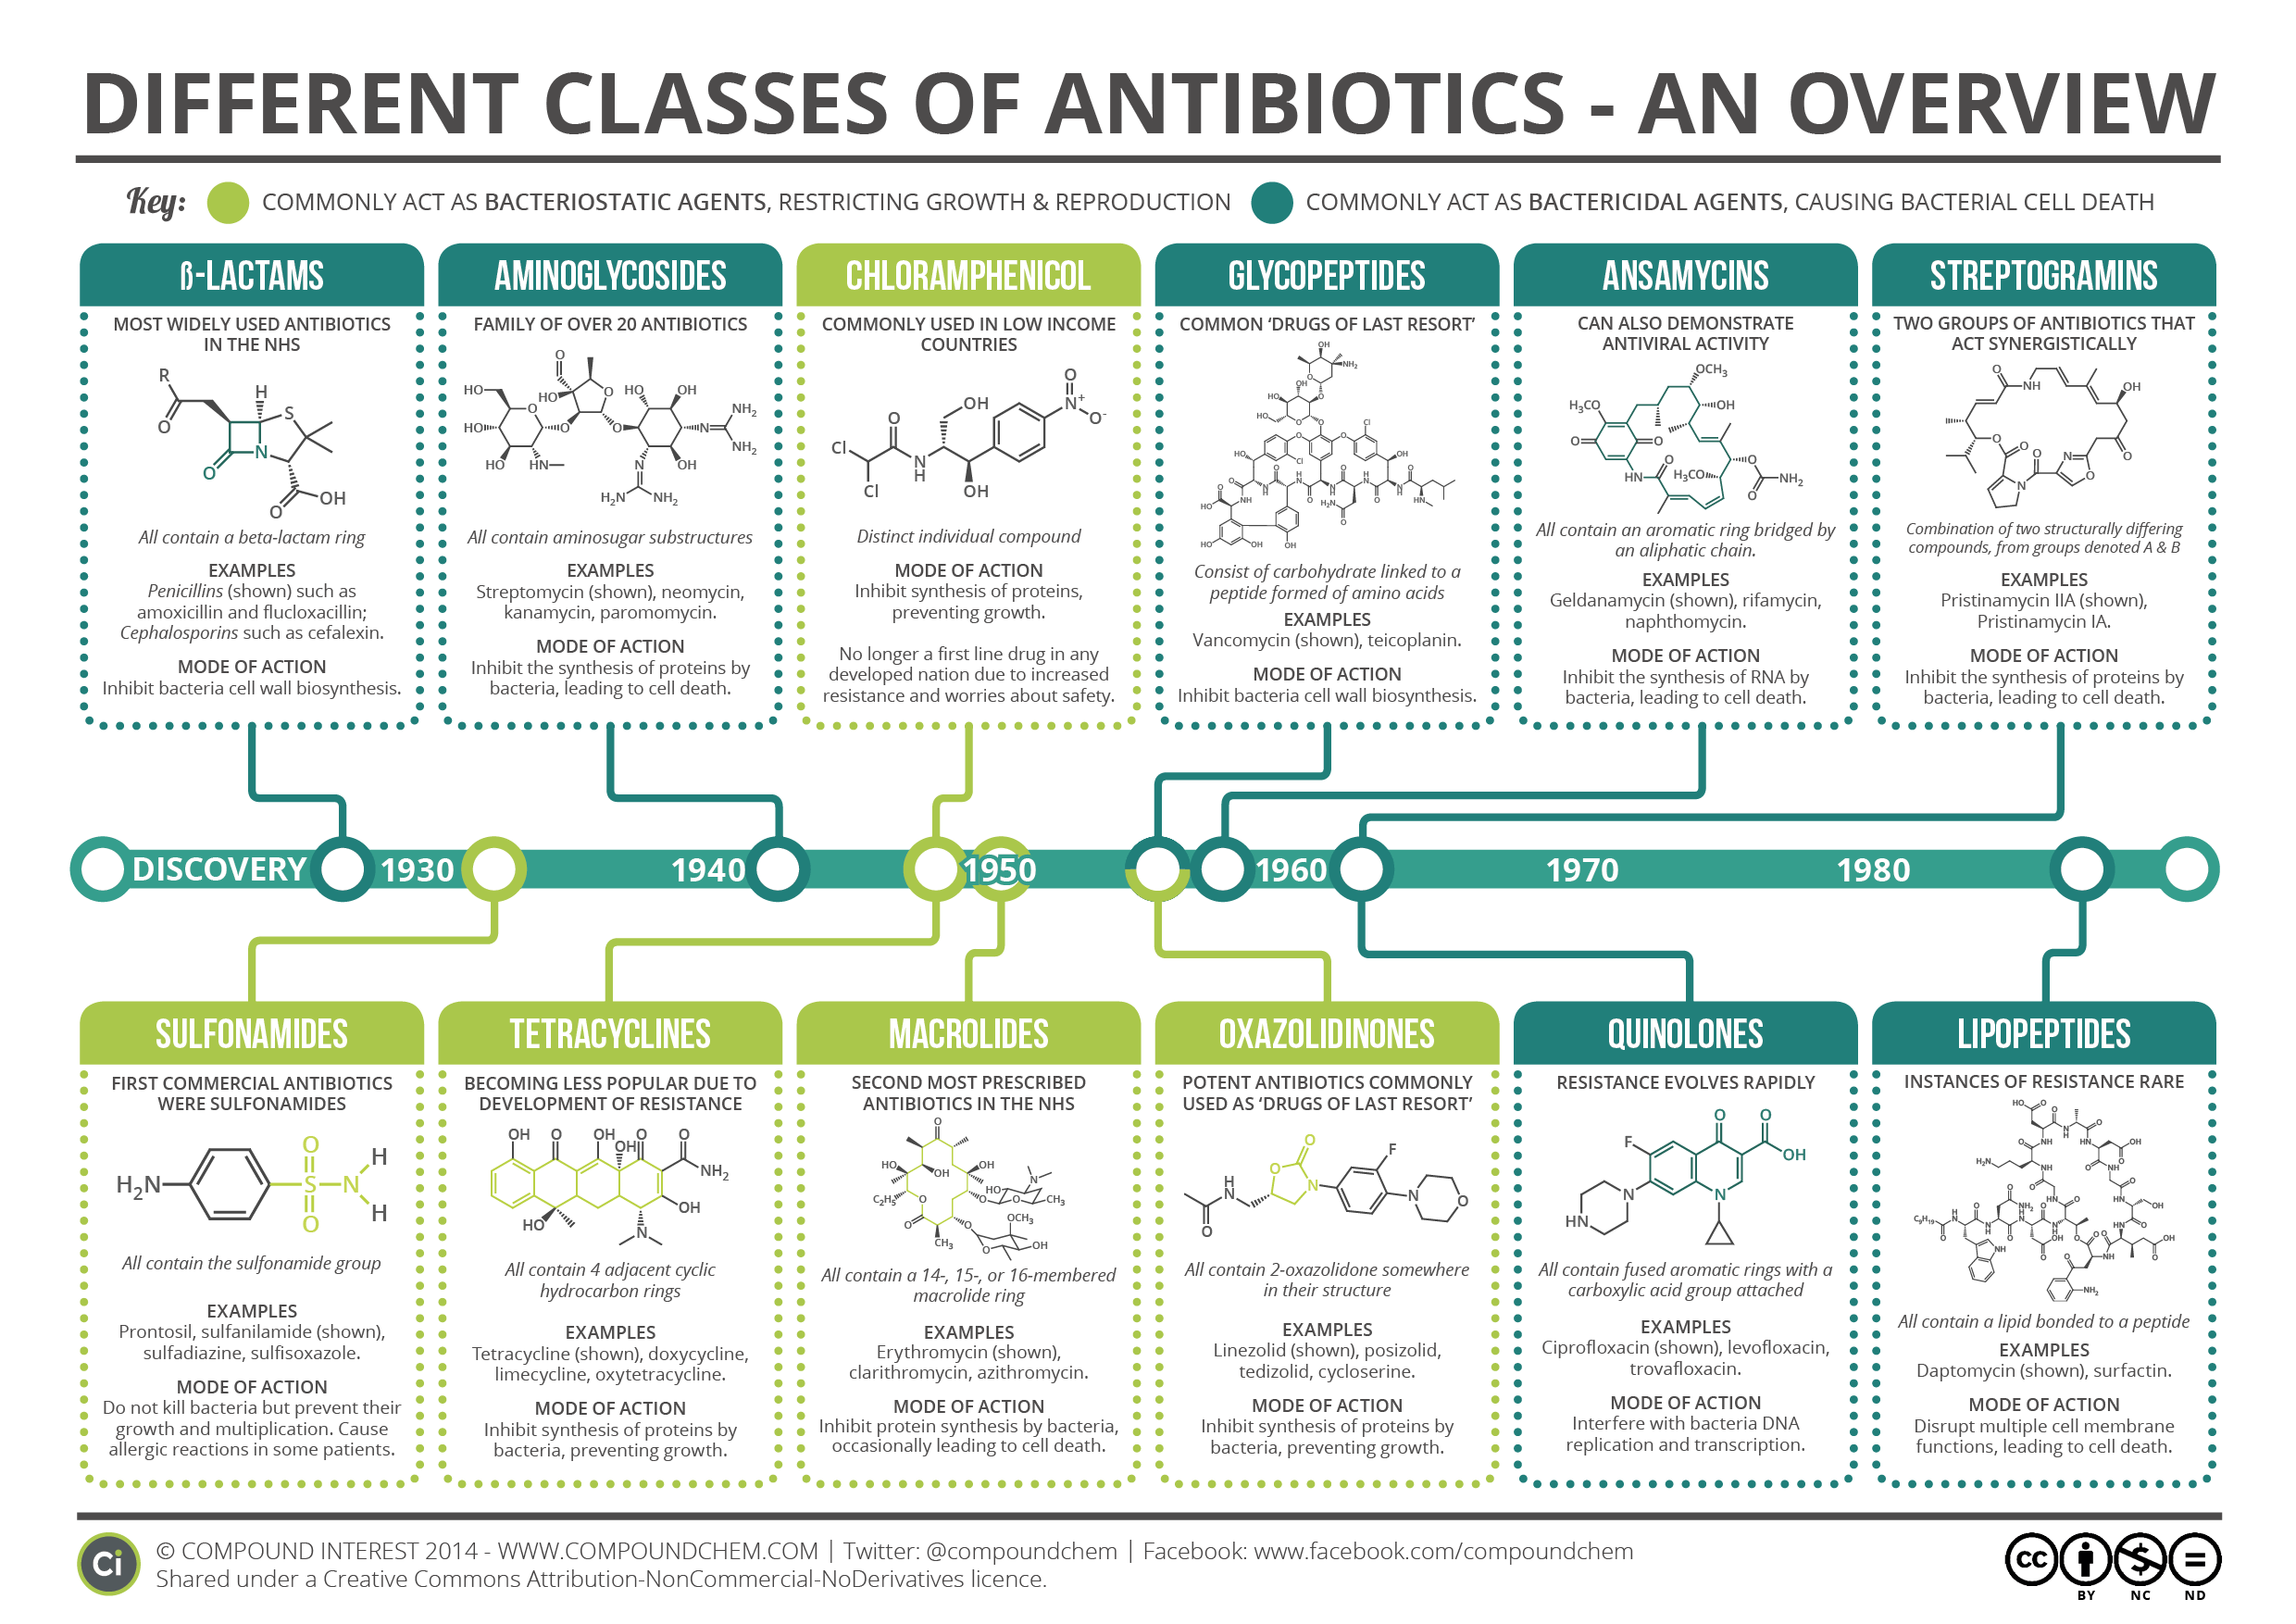 Major Classes of Antibiotics Summary